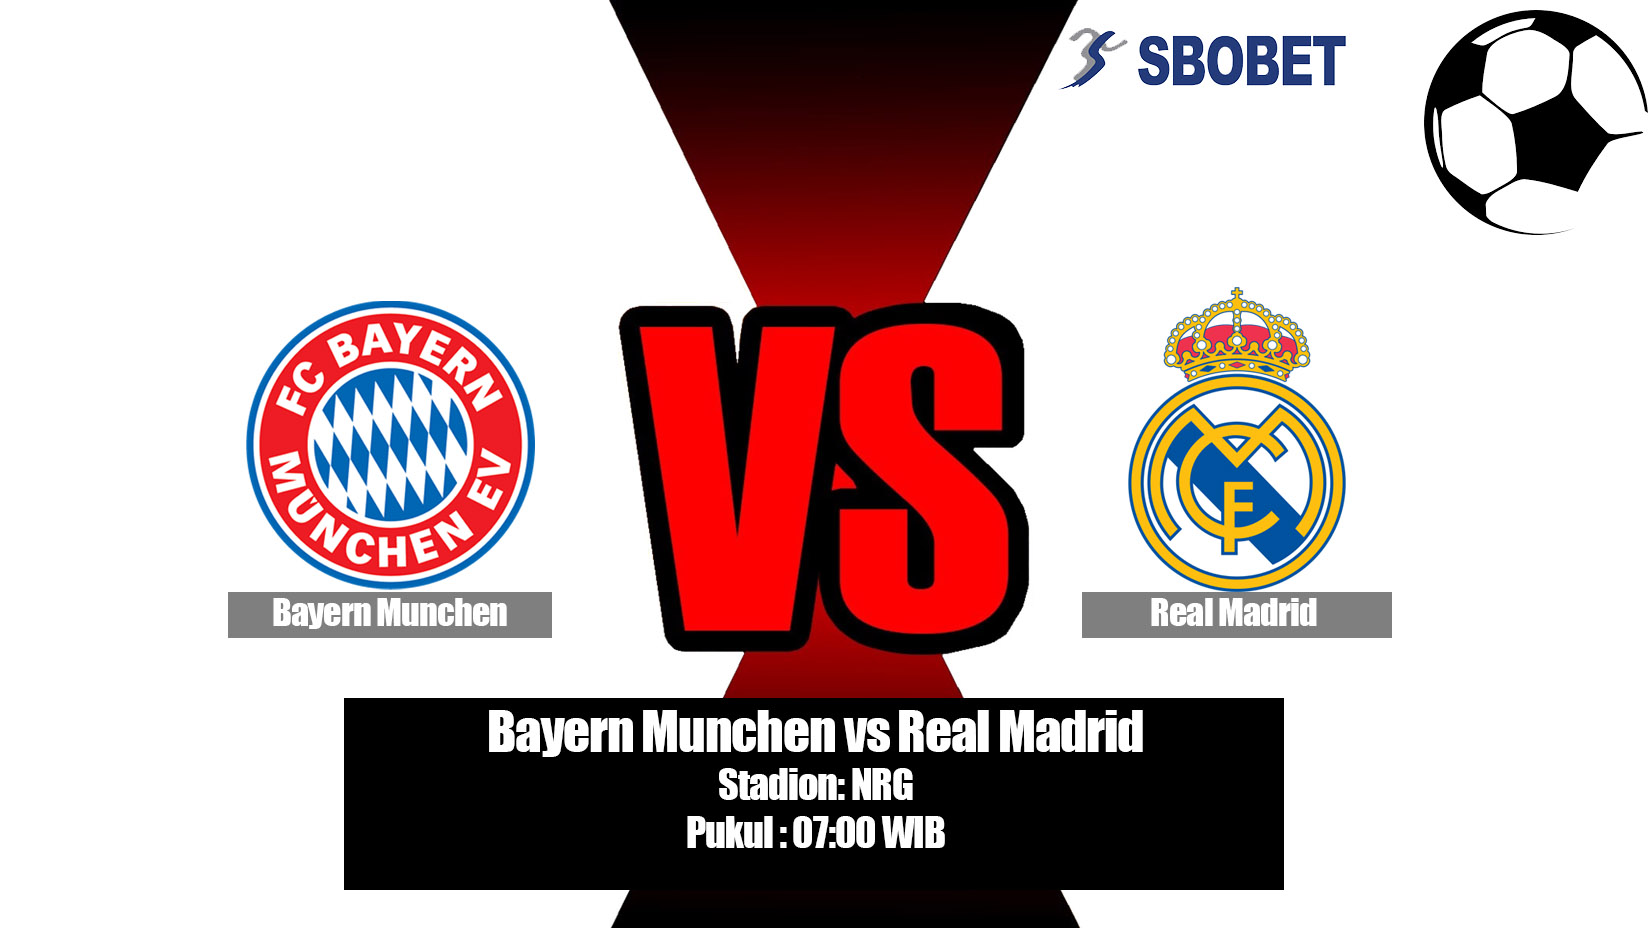 Prediksi Bola Bayern Munchen vs Real Madrid 21 Juli 2019.jpg